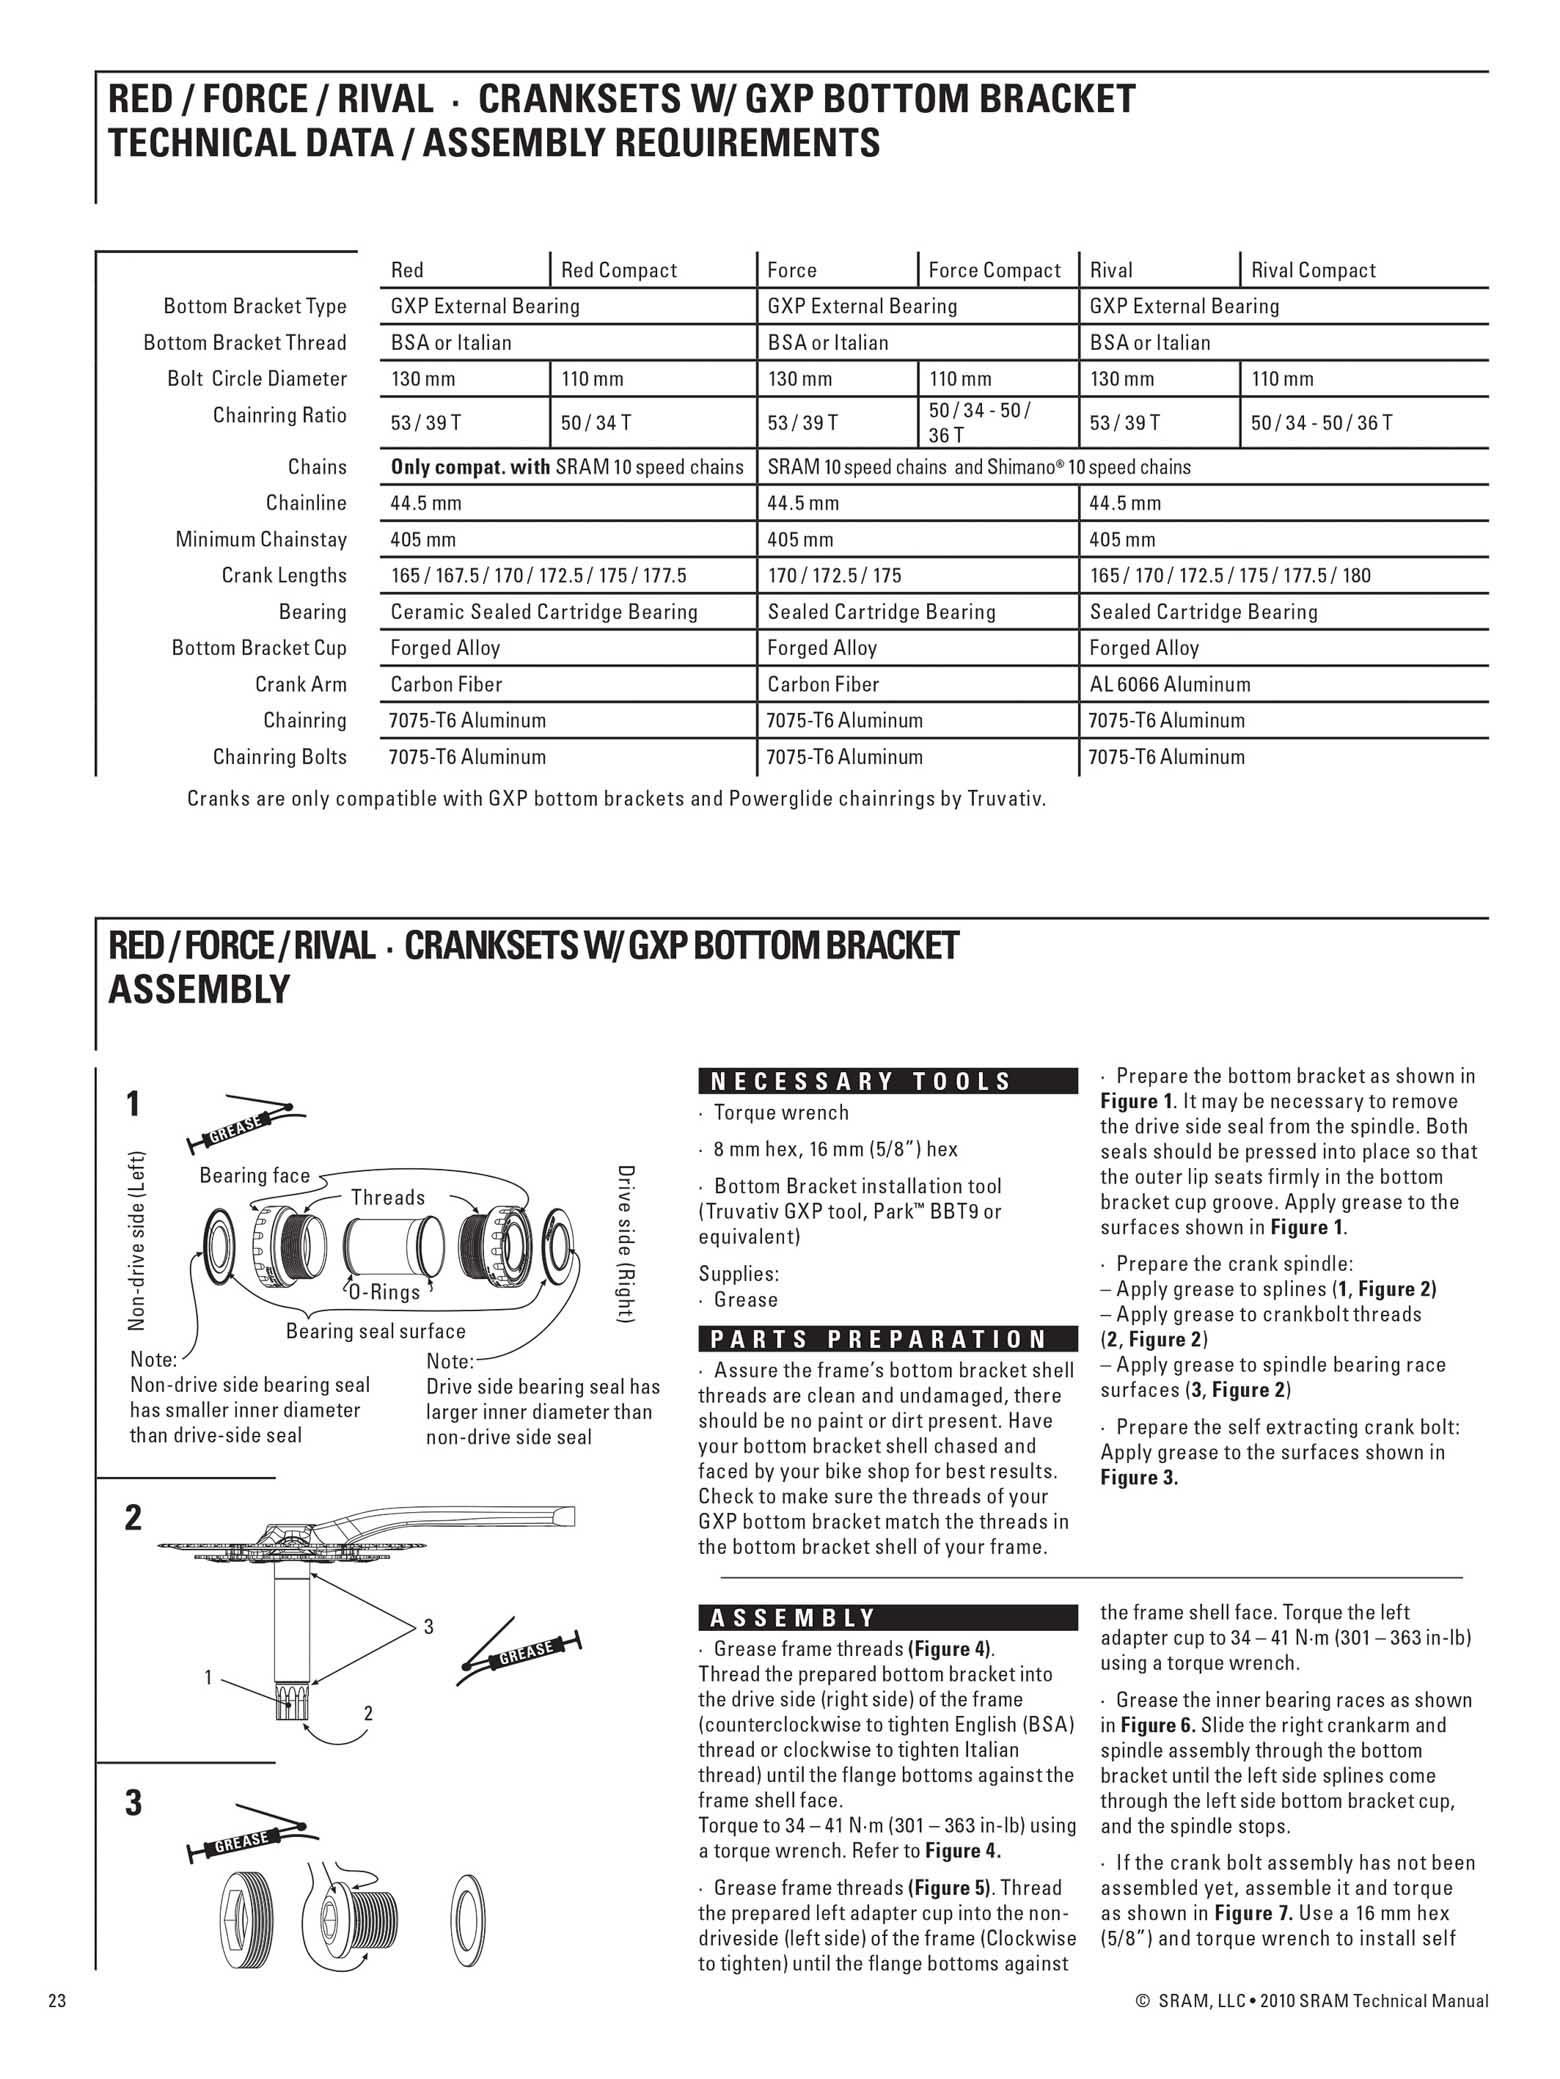 SRAM Technical Manual 2010 page 023 main image